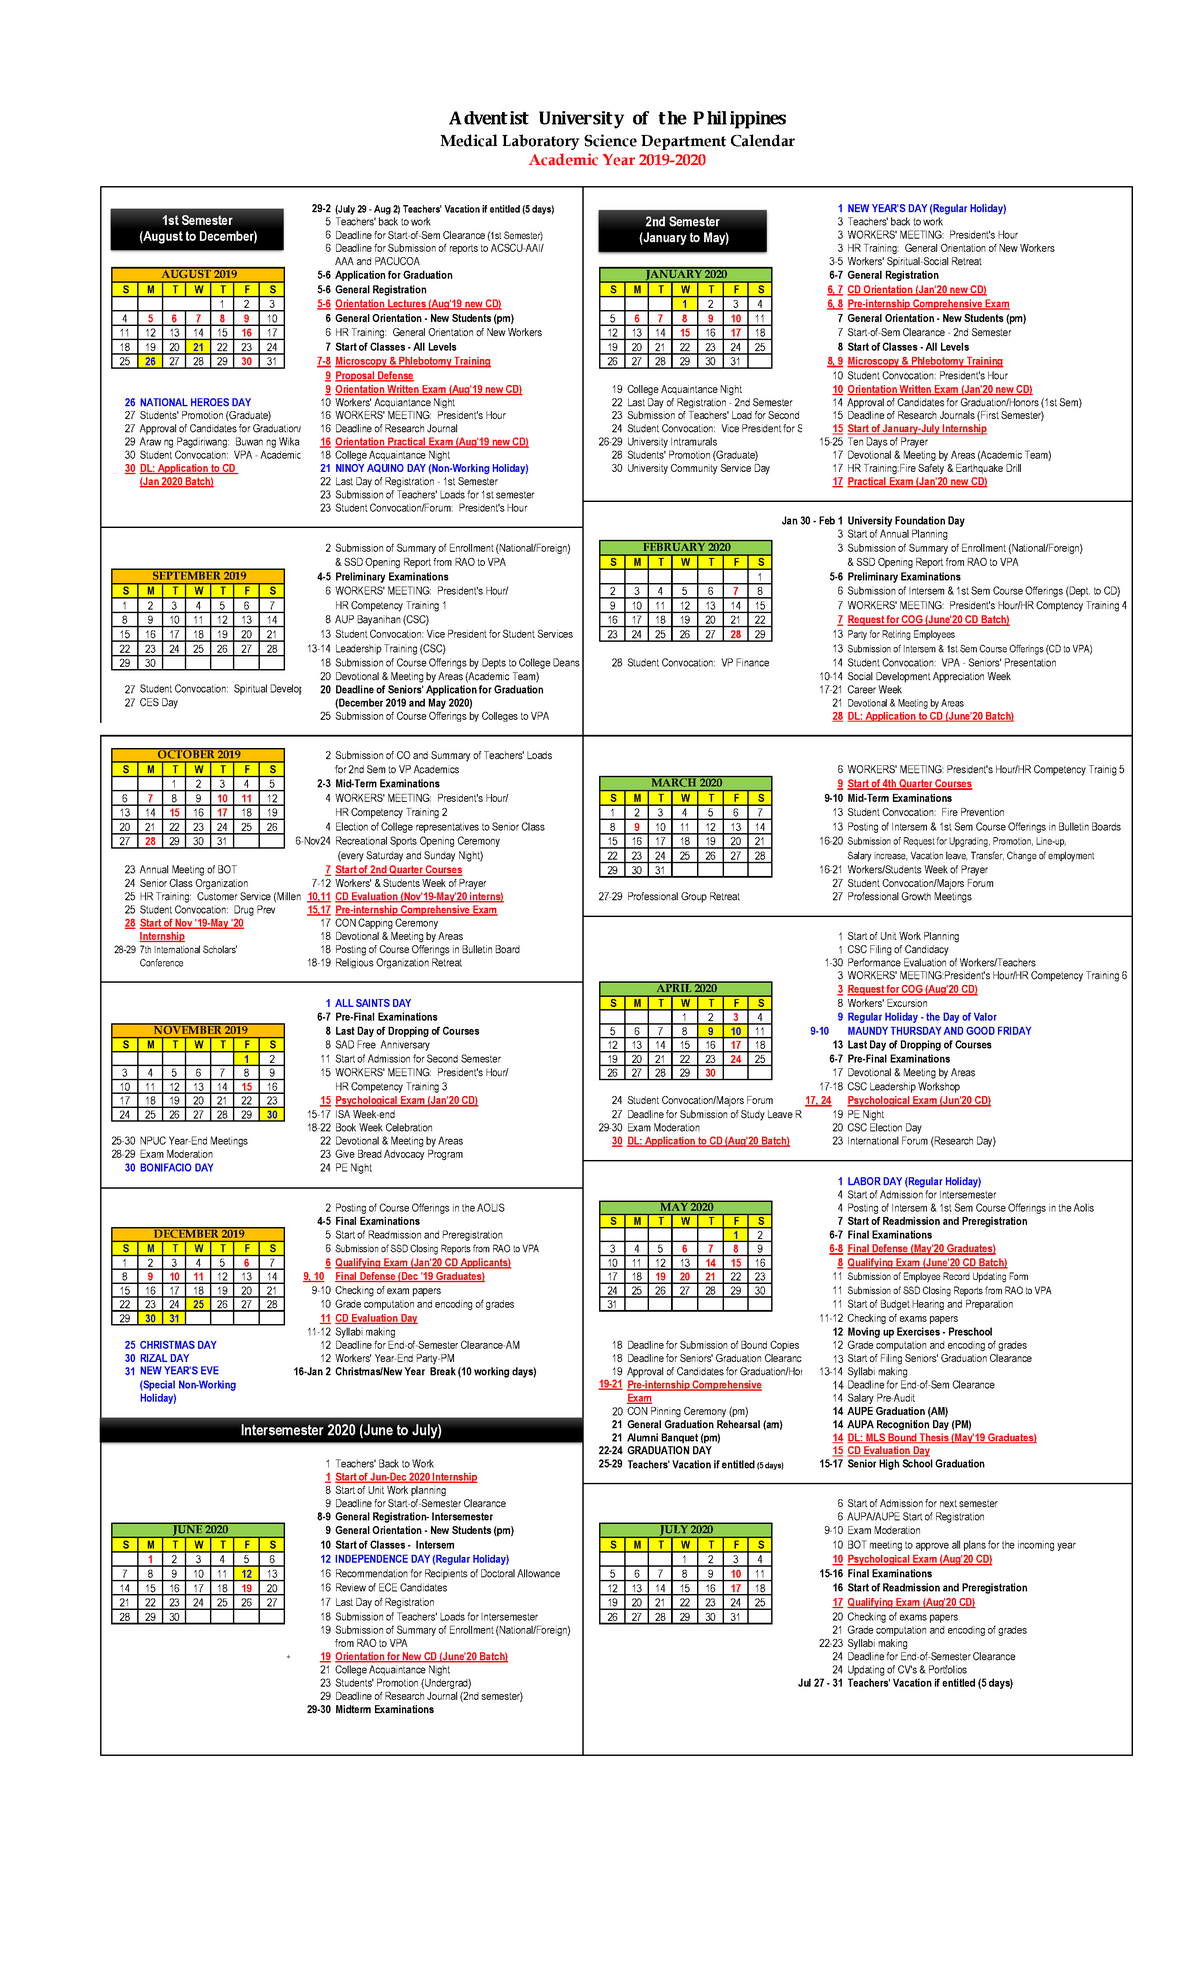 AUP MLS Academic Calendar 20192020 Medical Laboratory Science StuDocu